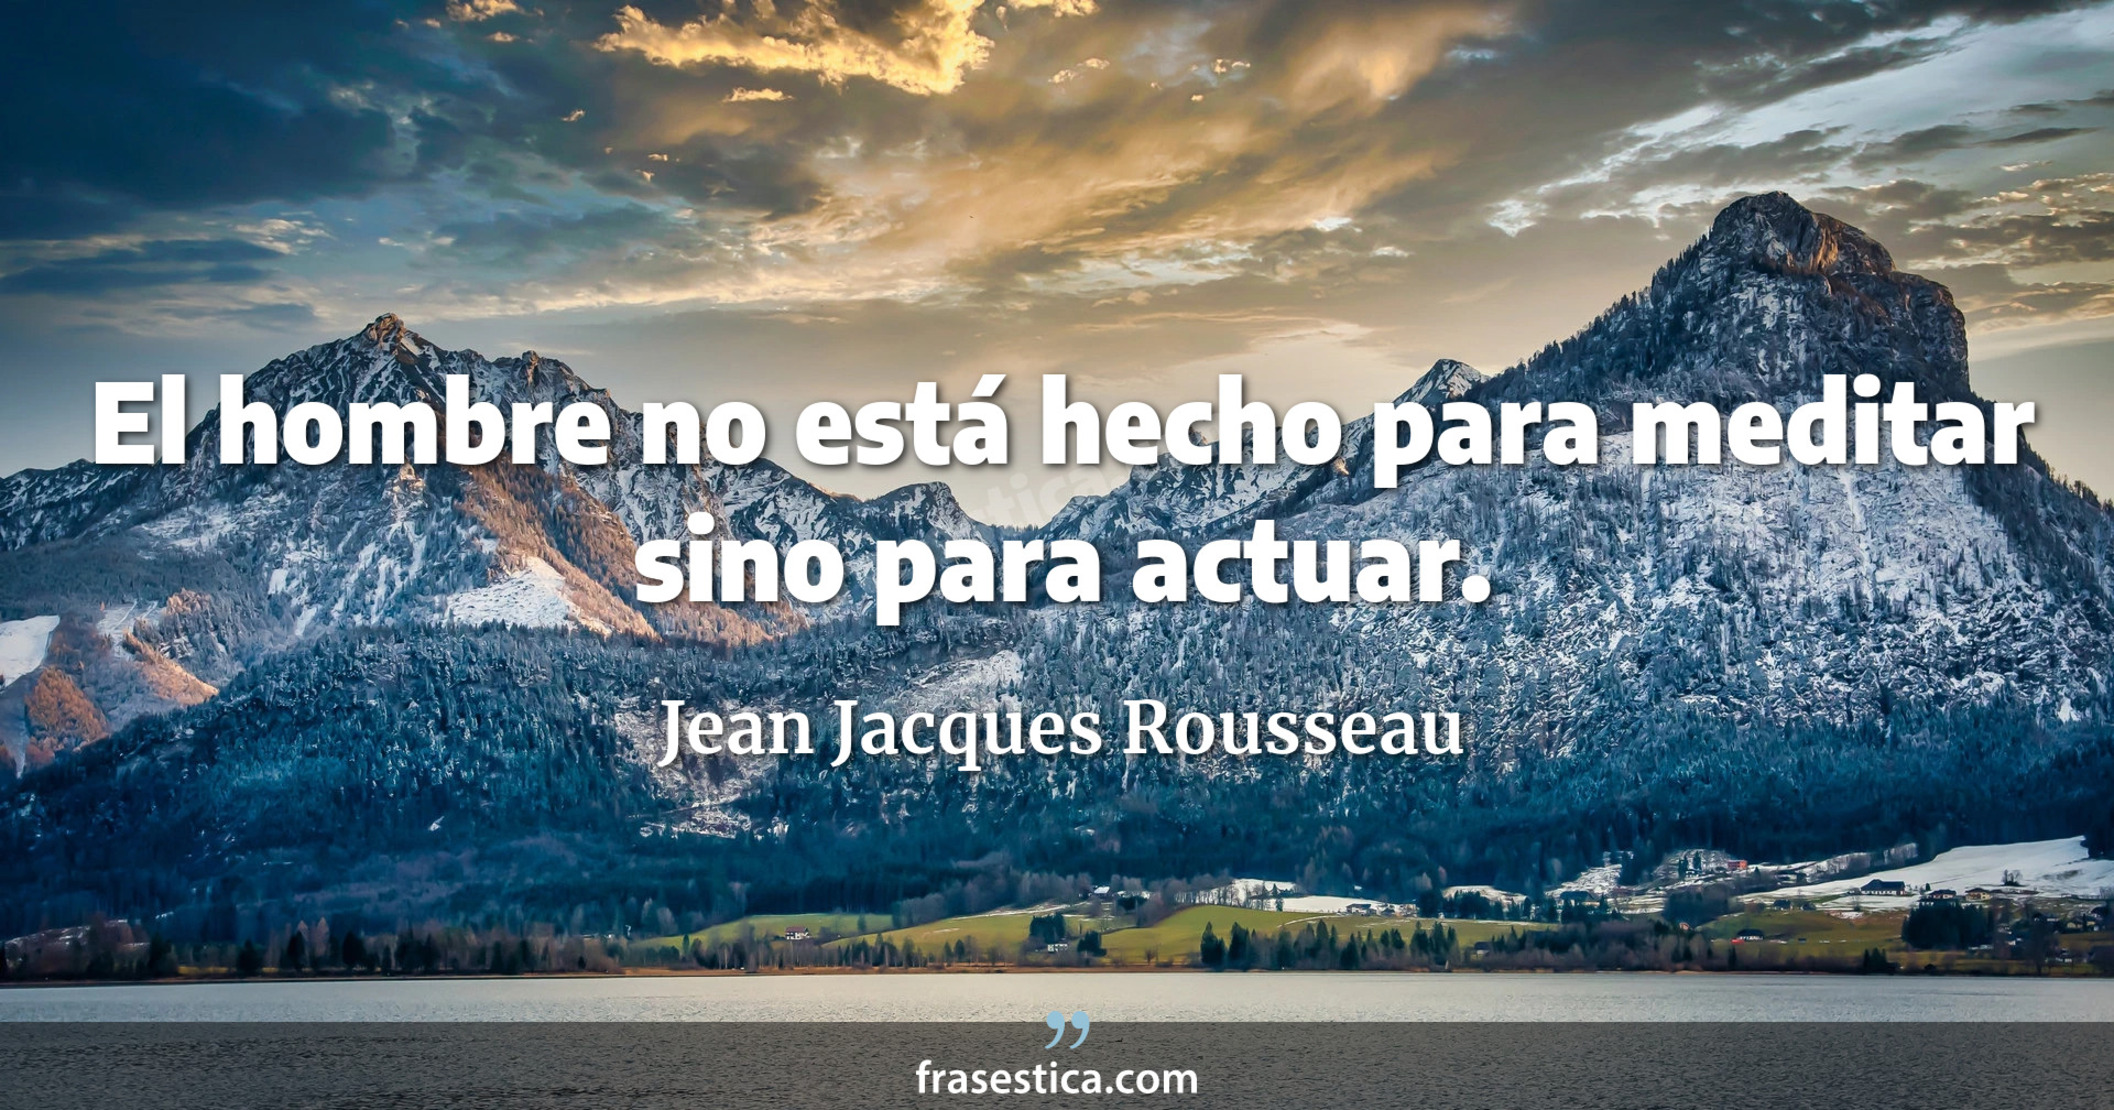 El hombre no está hecho para meditar sino para actuar. - Jean Jacques Rousseau